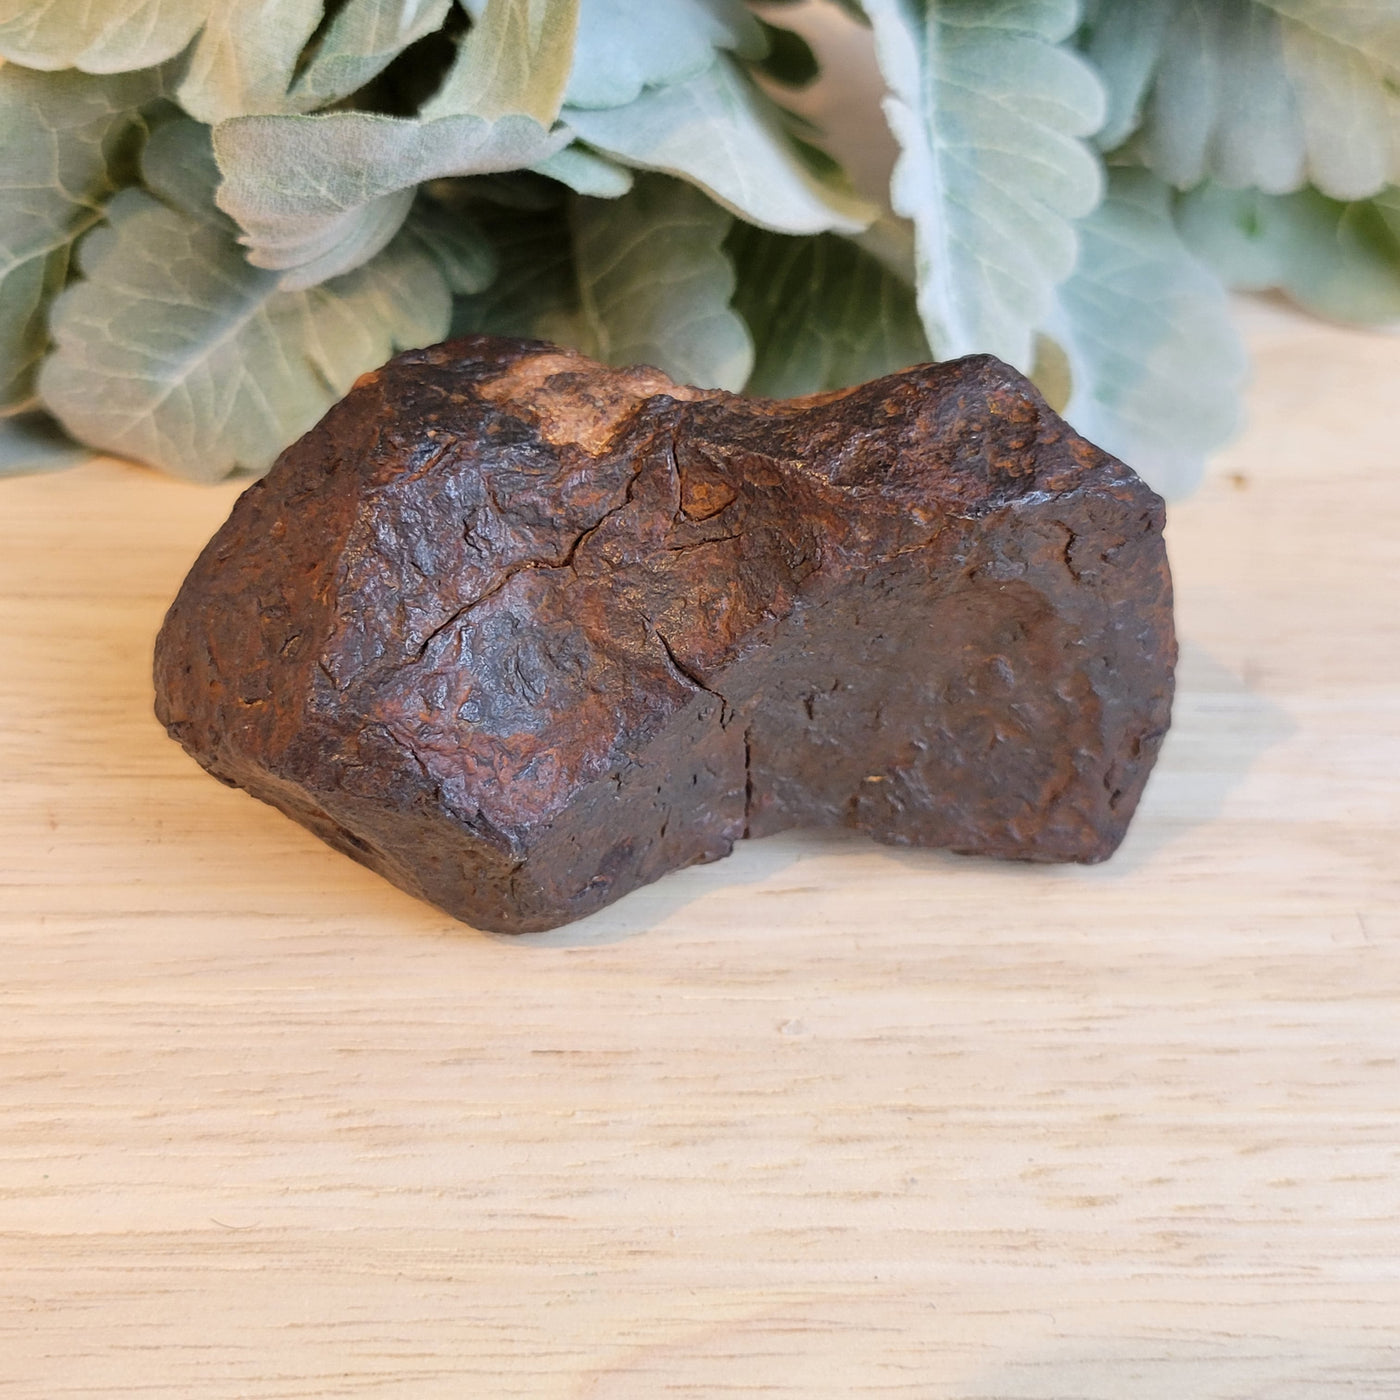 Odessa Texas Meteorite 3.5"x 2"